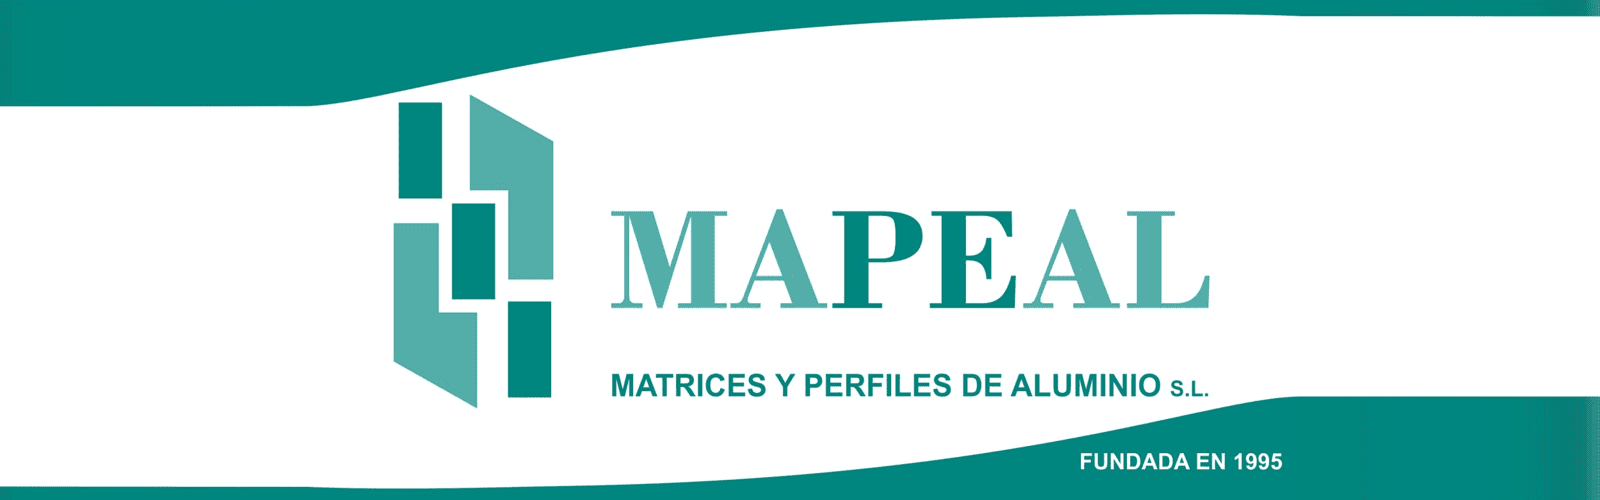 Mapeal imagen logo